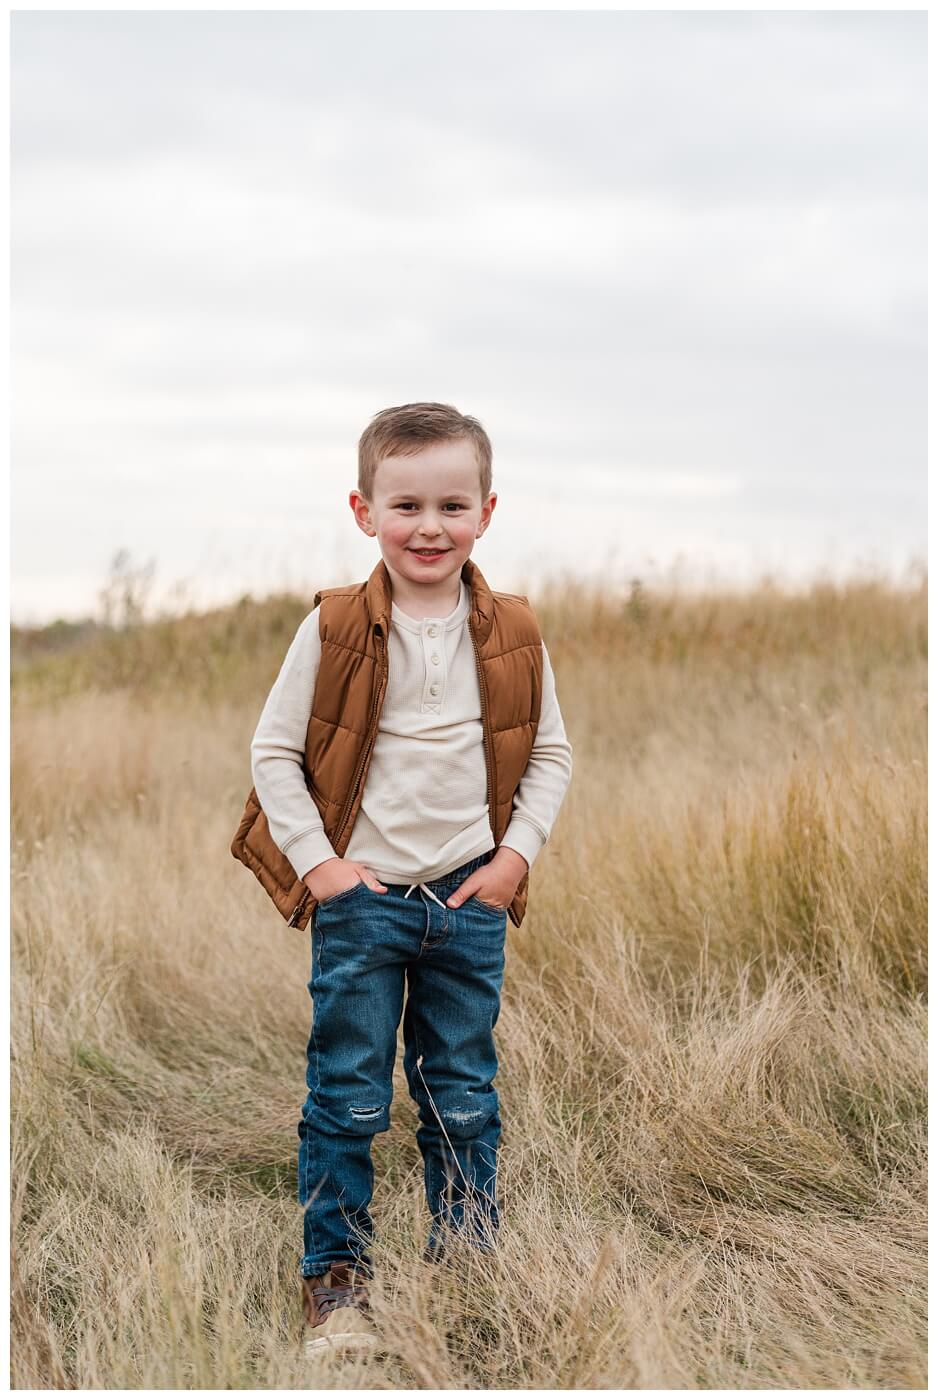 Zurowski Family - Wascana Trails - 10 - Little boy in blue jeans